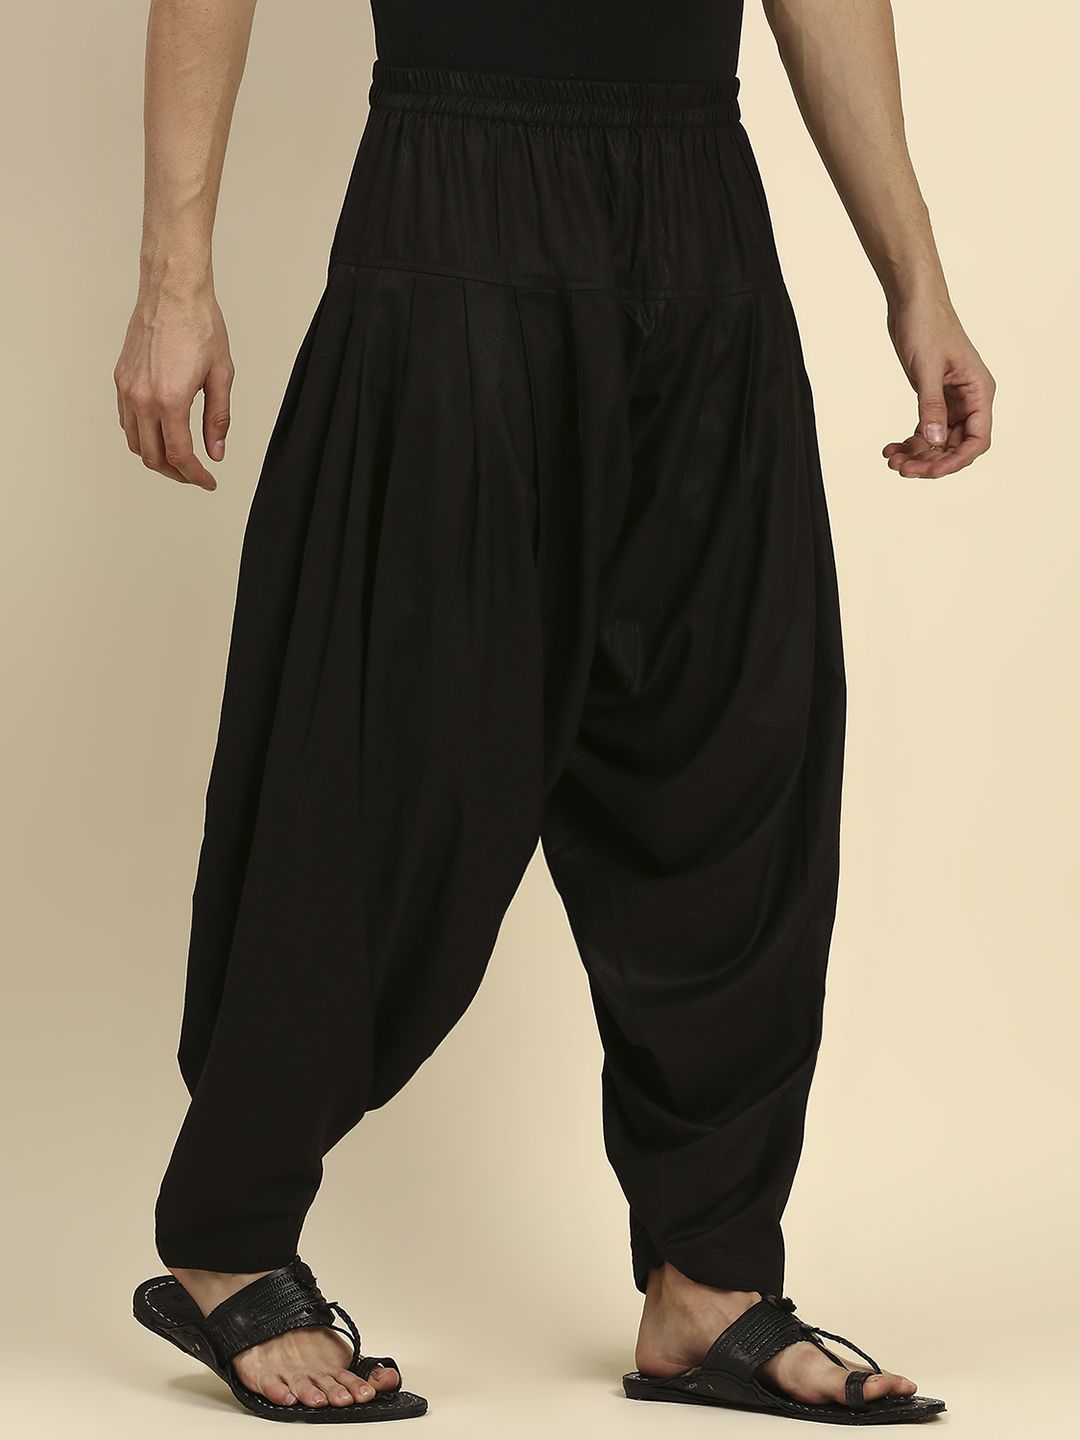 Black Cotton Patiala #SalwarKameez | Latest salwar kameez designs, Punjabi  outfits, Indian designer wear